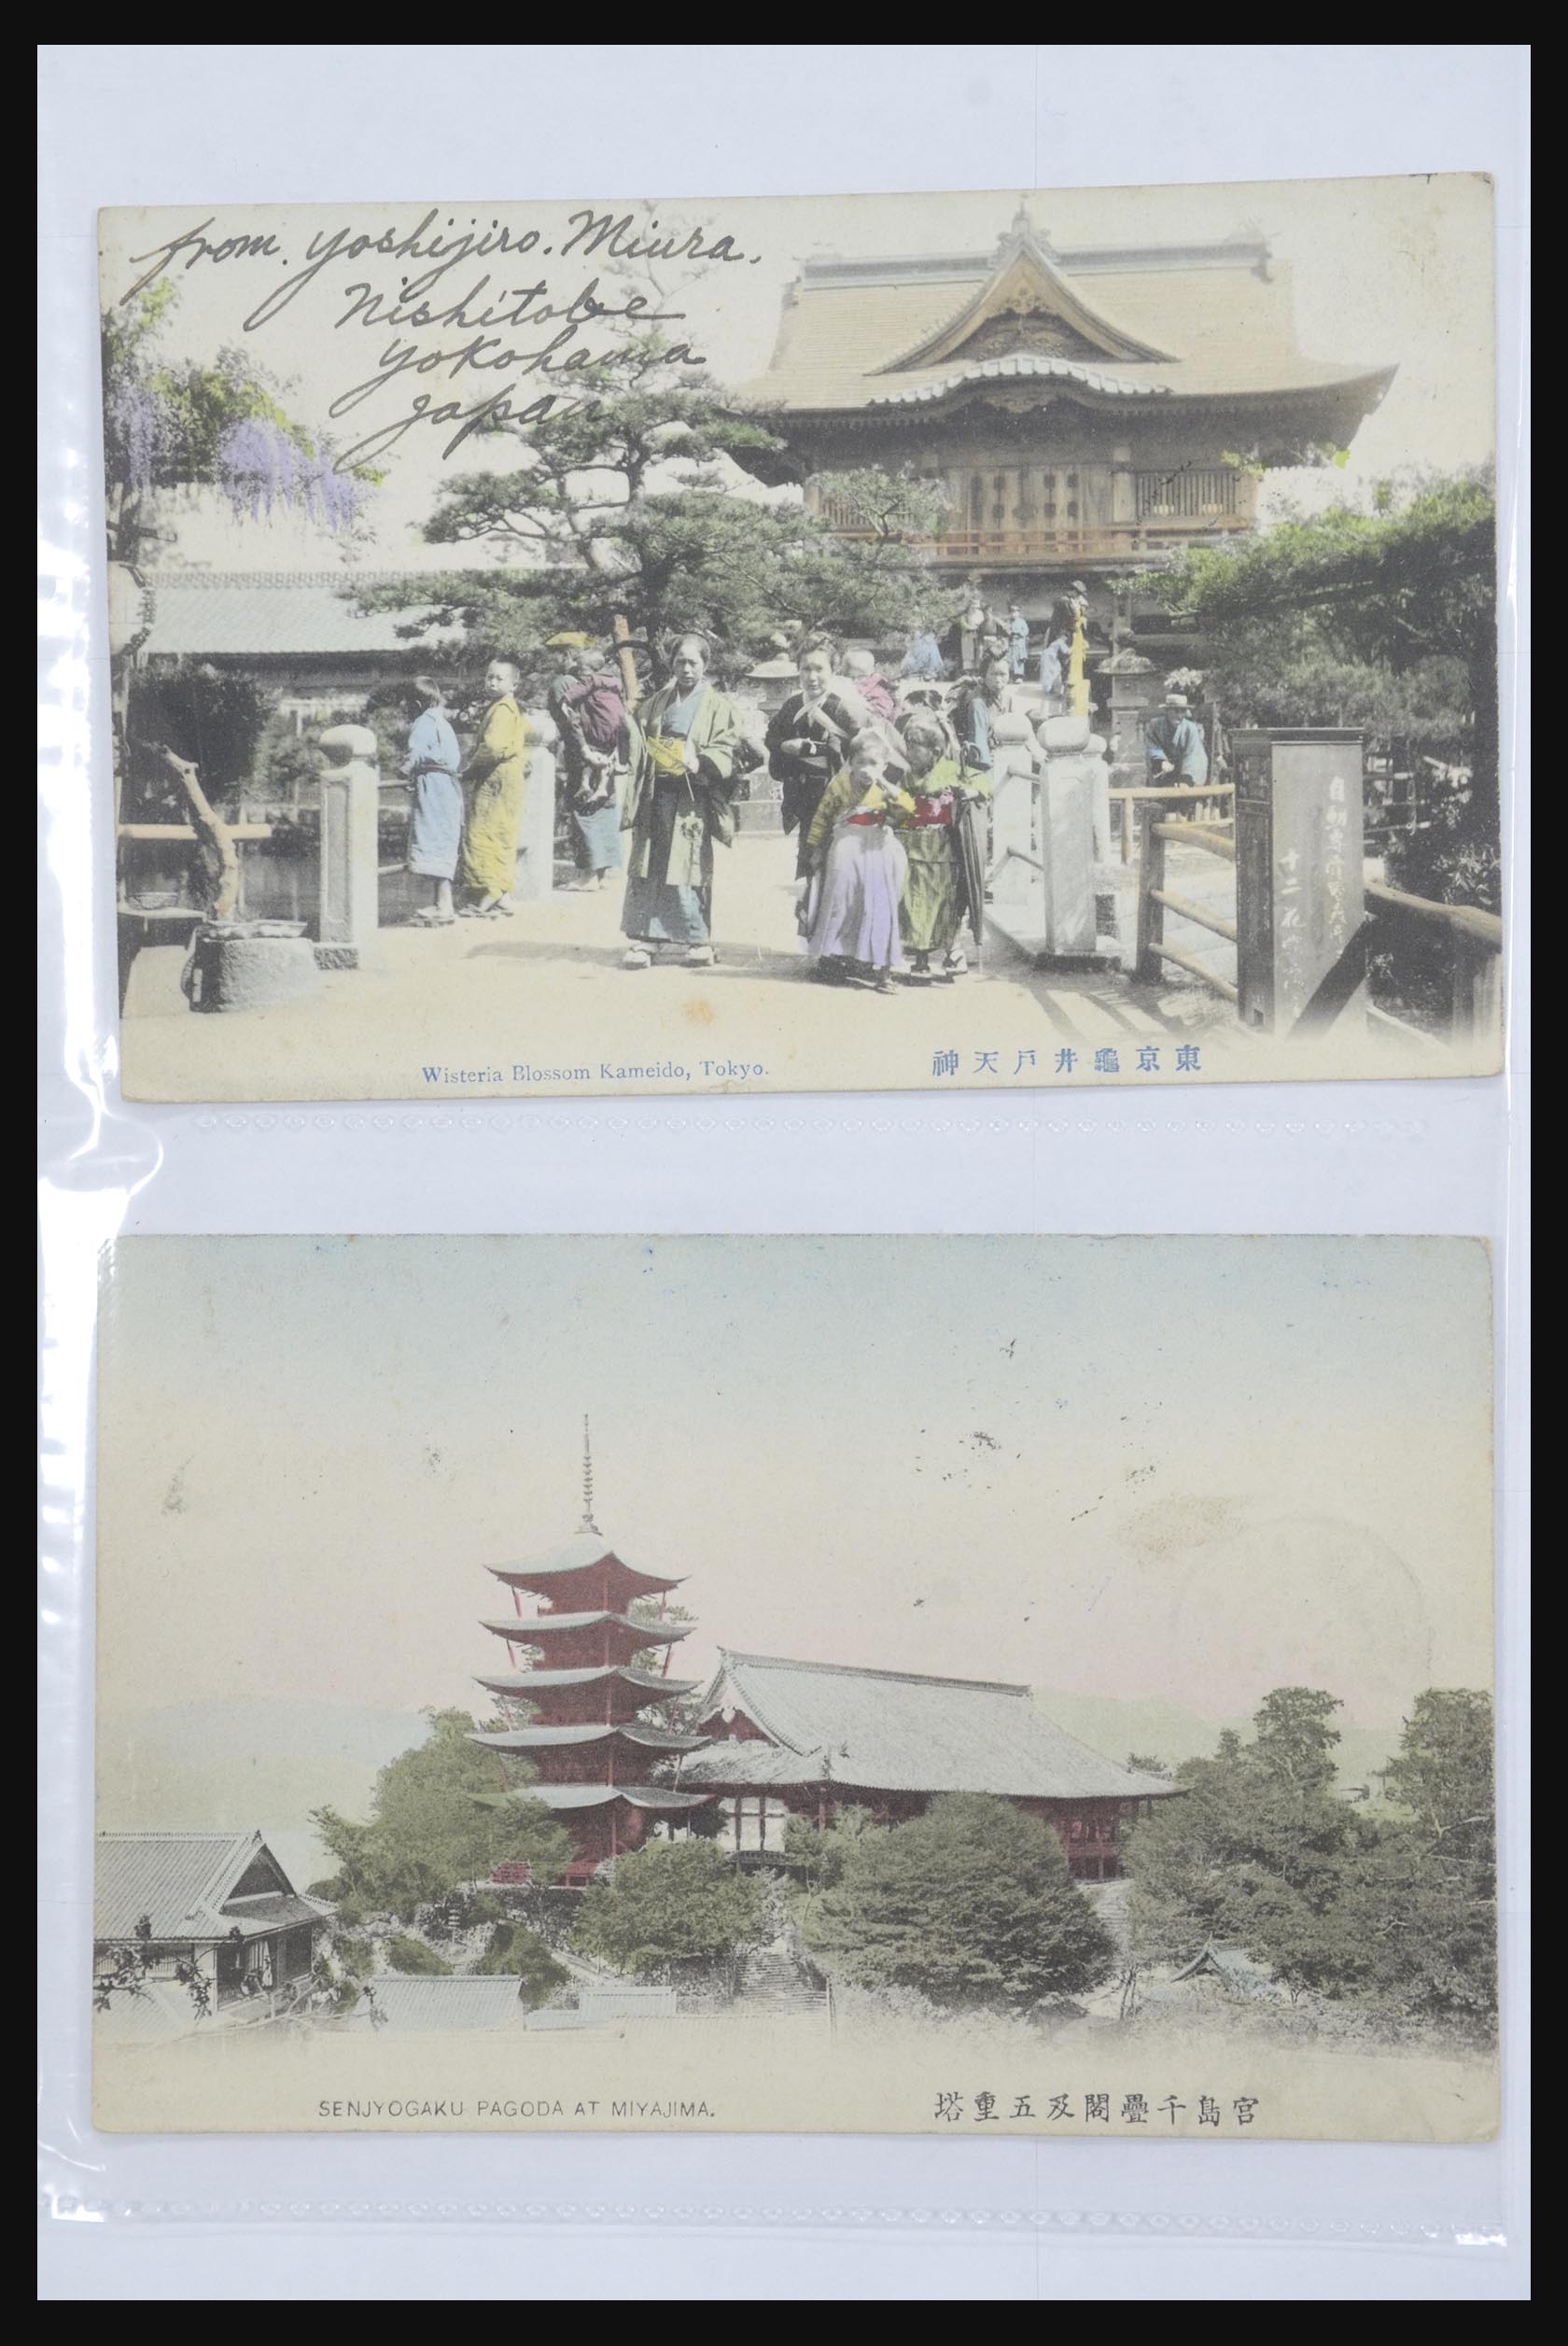 31667 013 - 31667 Japan picture postcards 1900-1920.